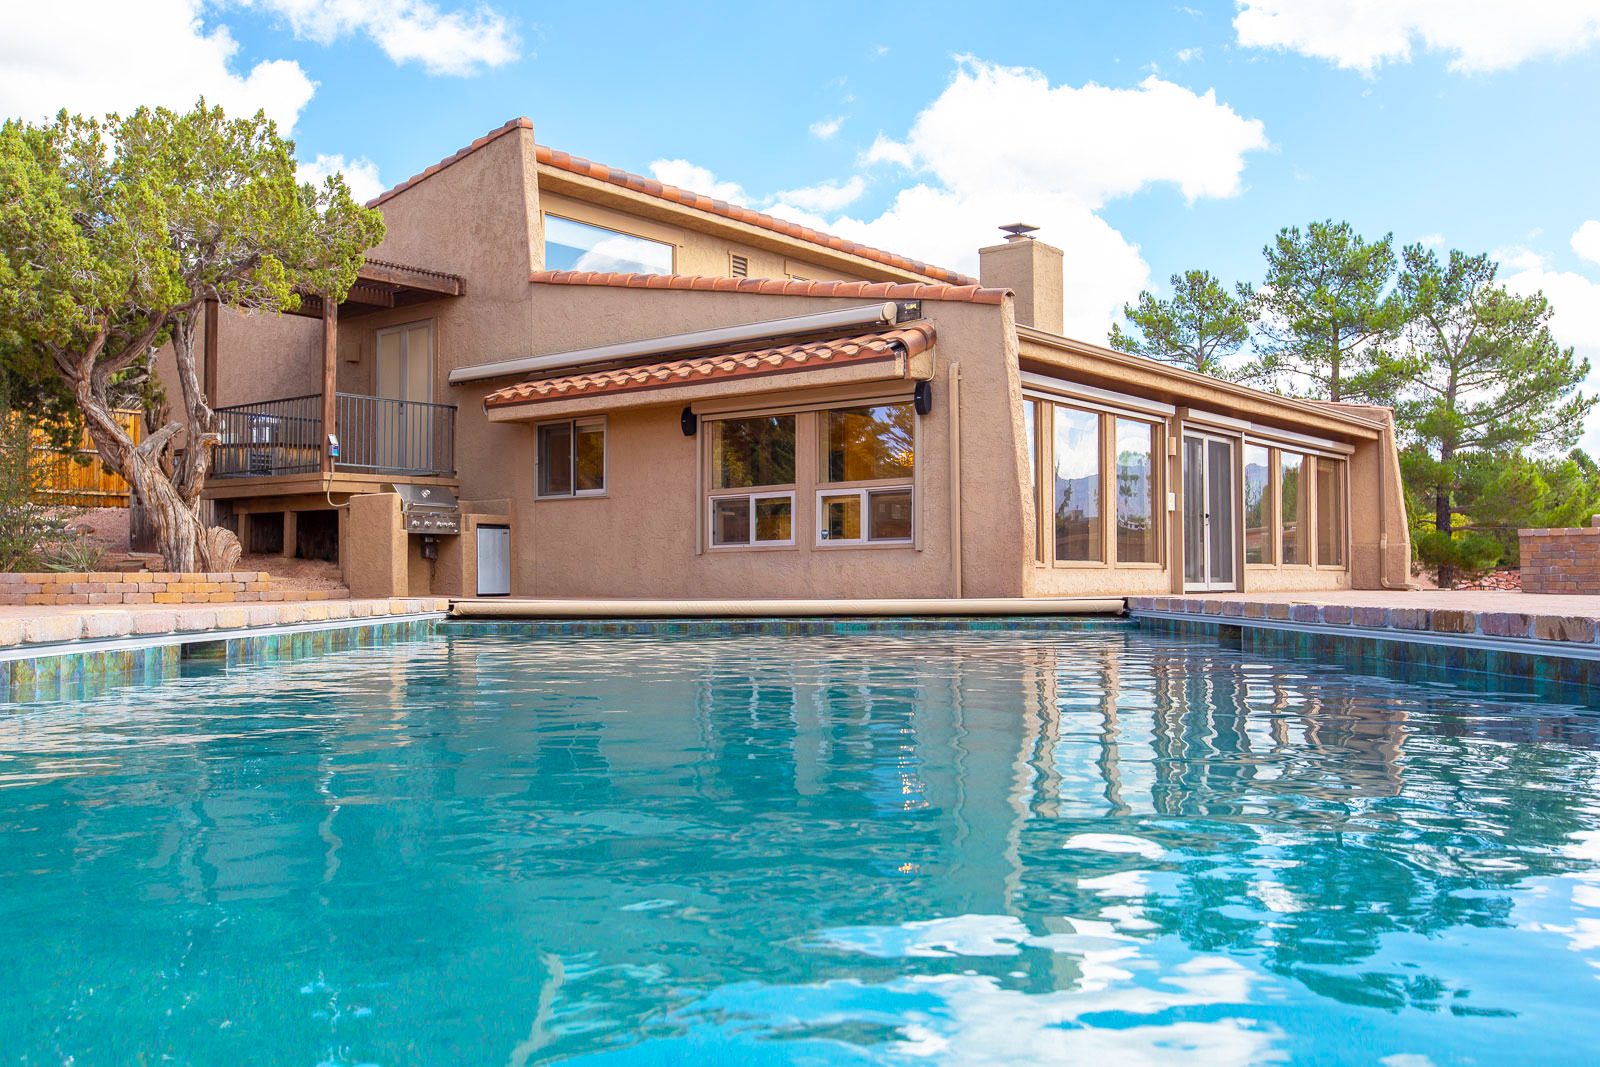 Sedona home with a pool